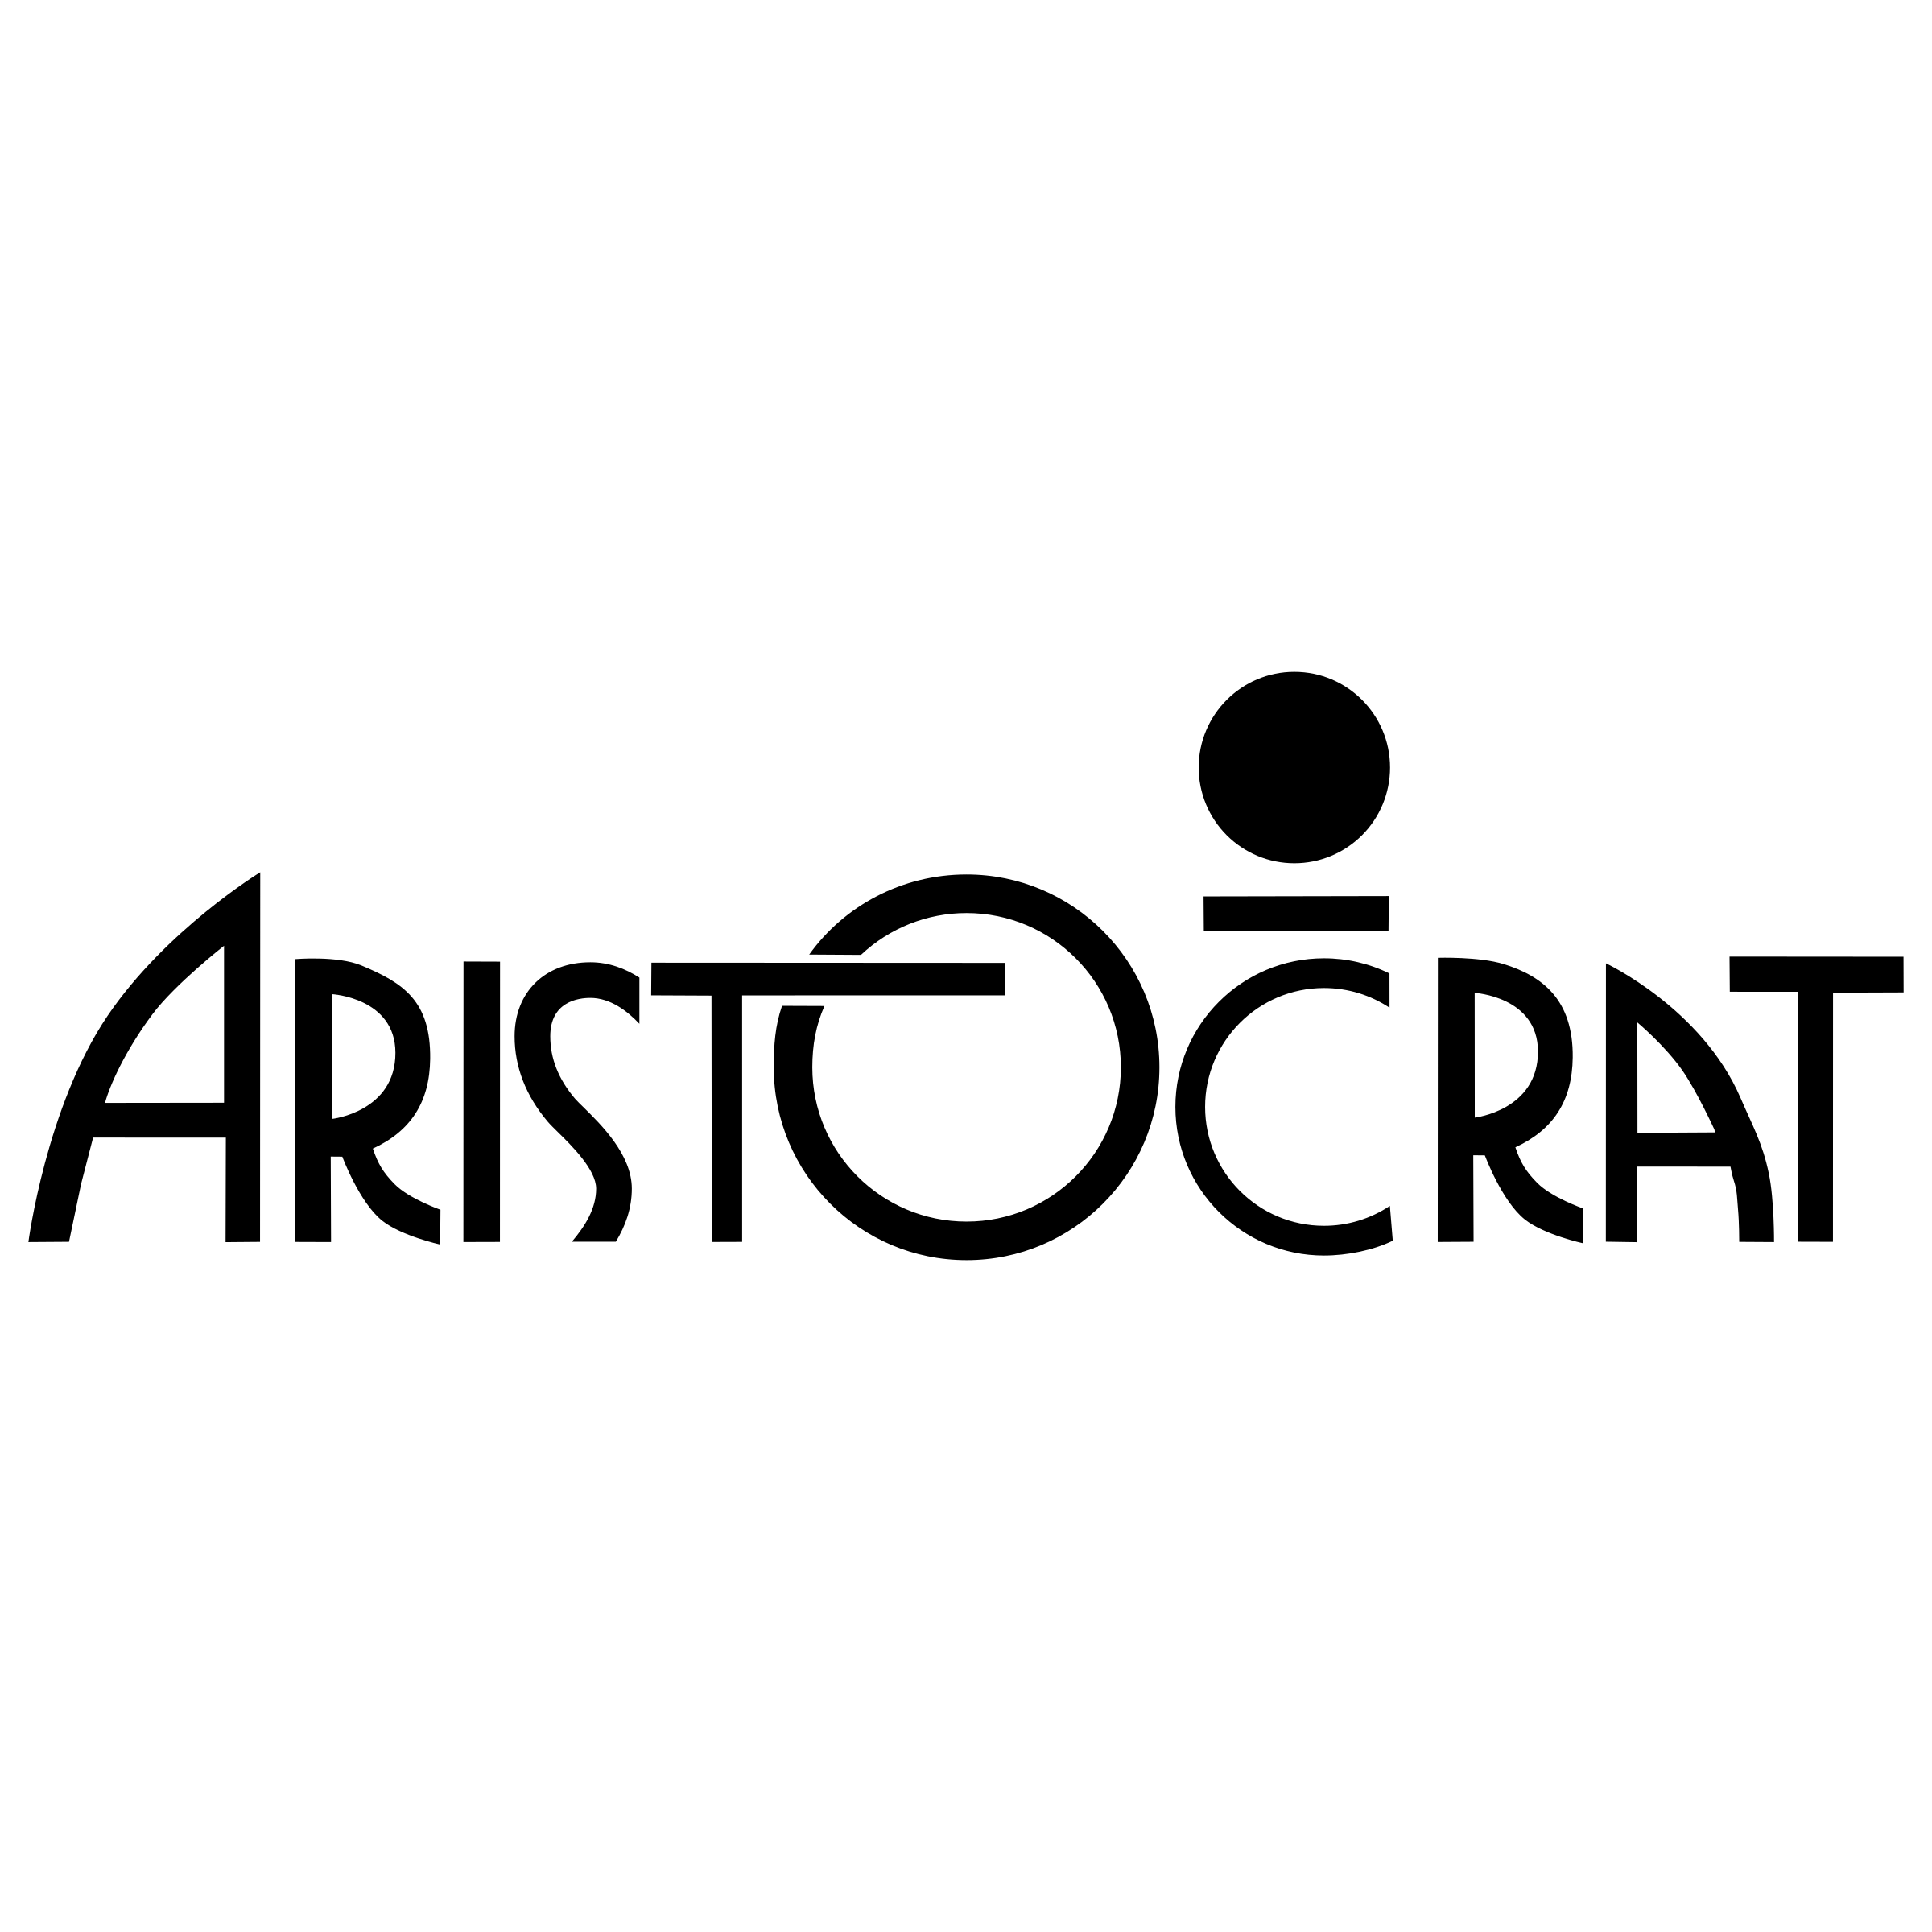 Aristocrat Logo - Aristocrat Logo PNG Transparent & SVG Vector